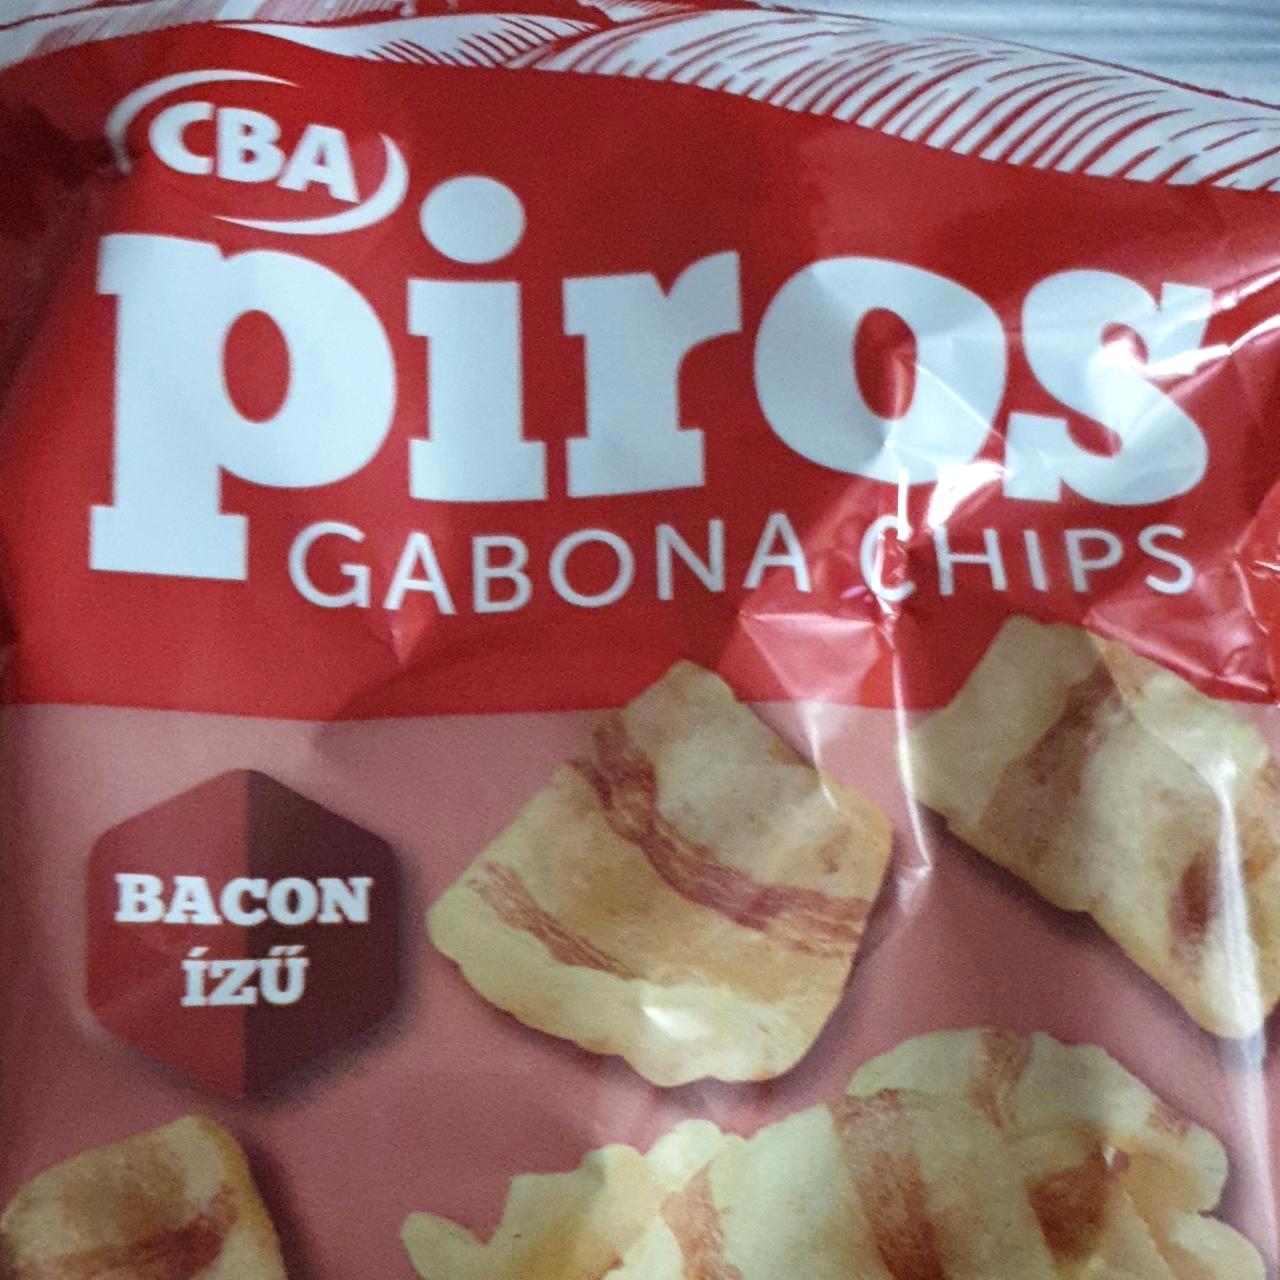 Képek - Gabona chips Bacon ízű CBA Piros